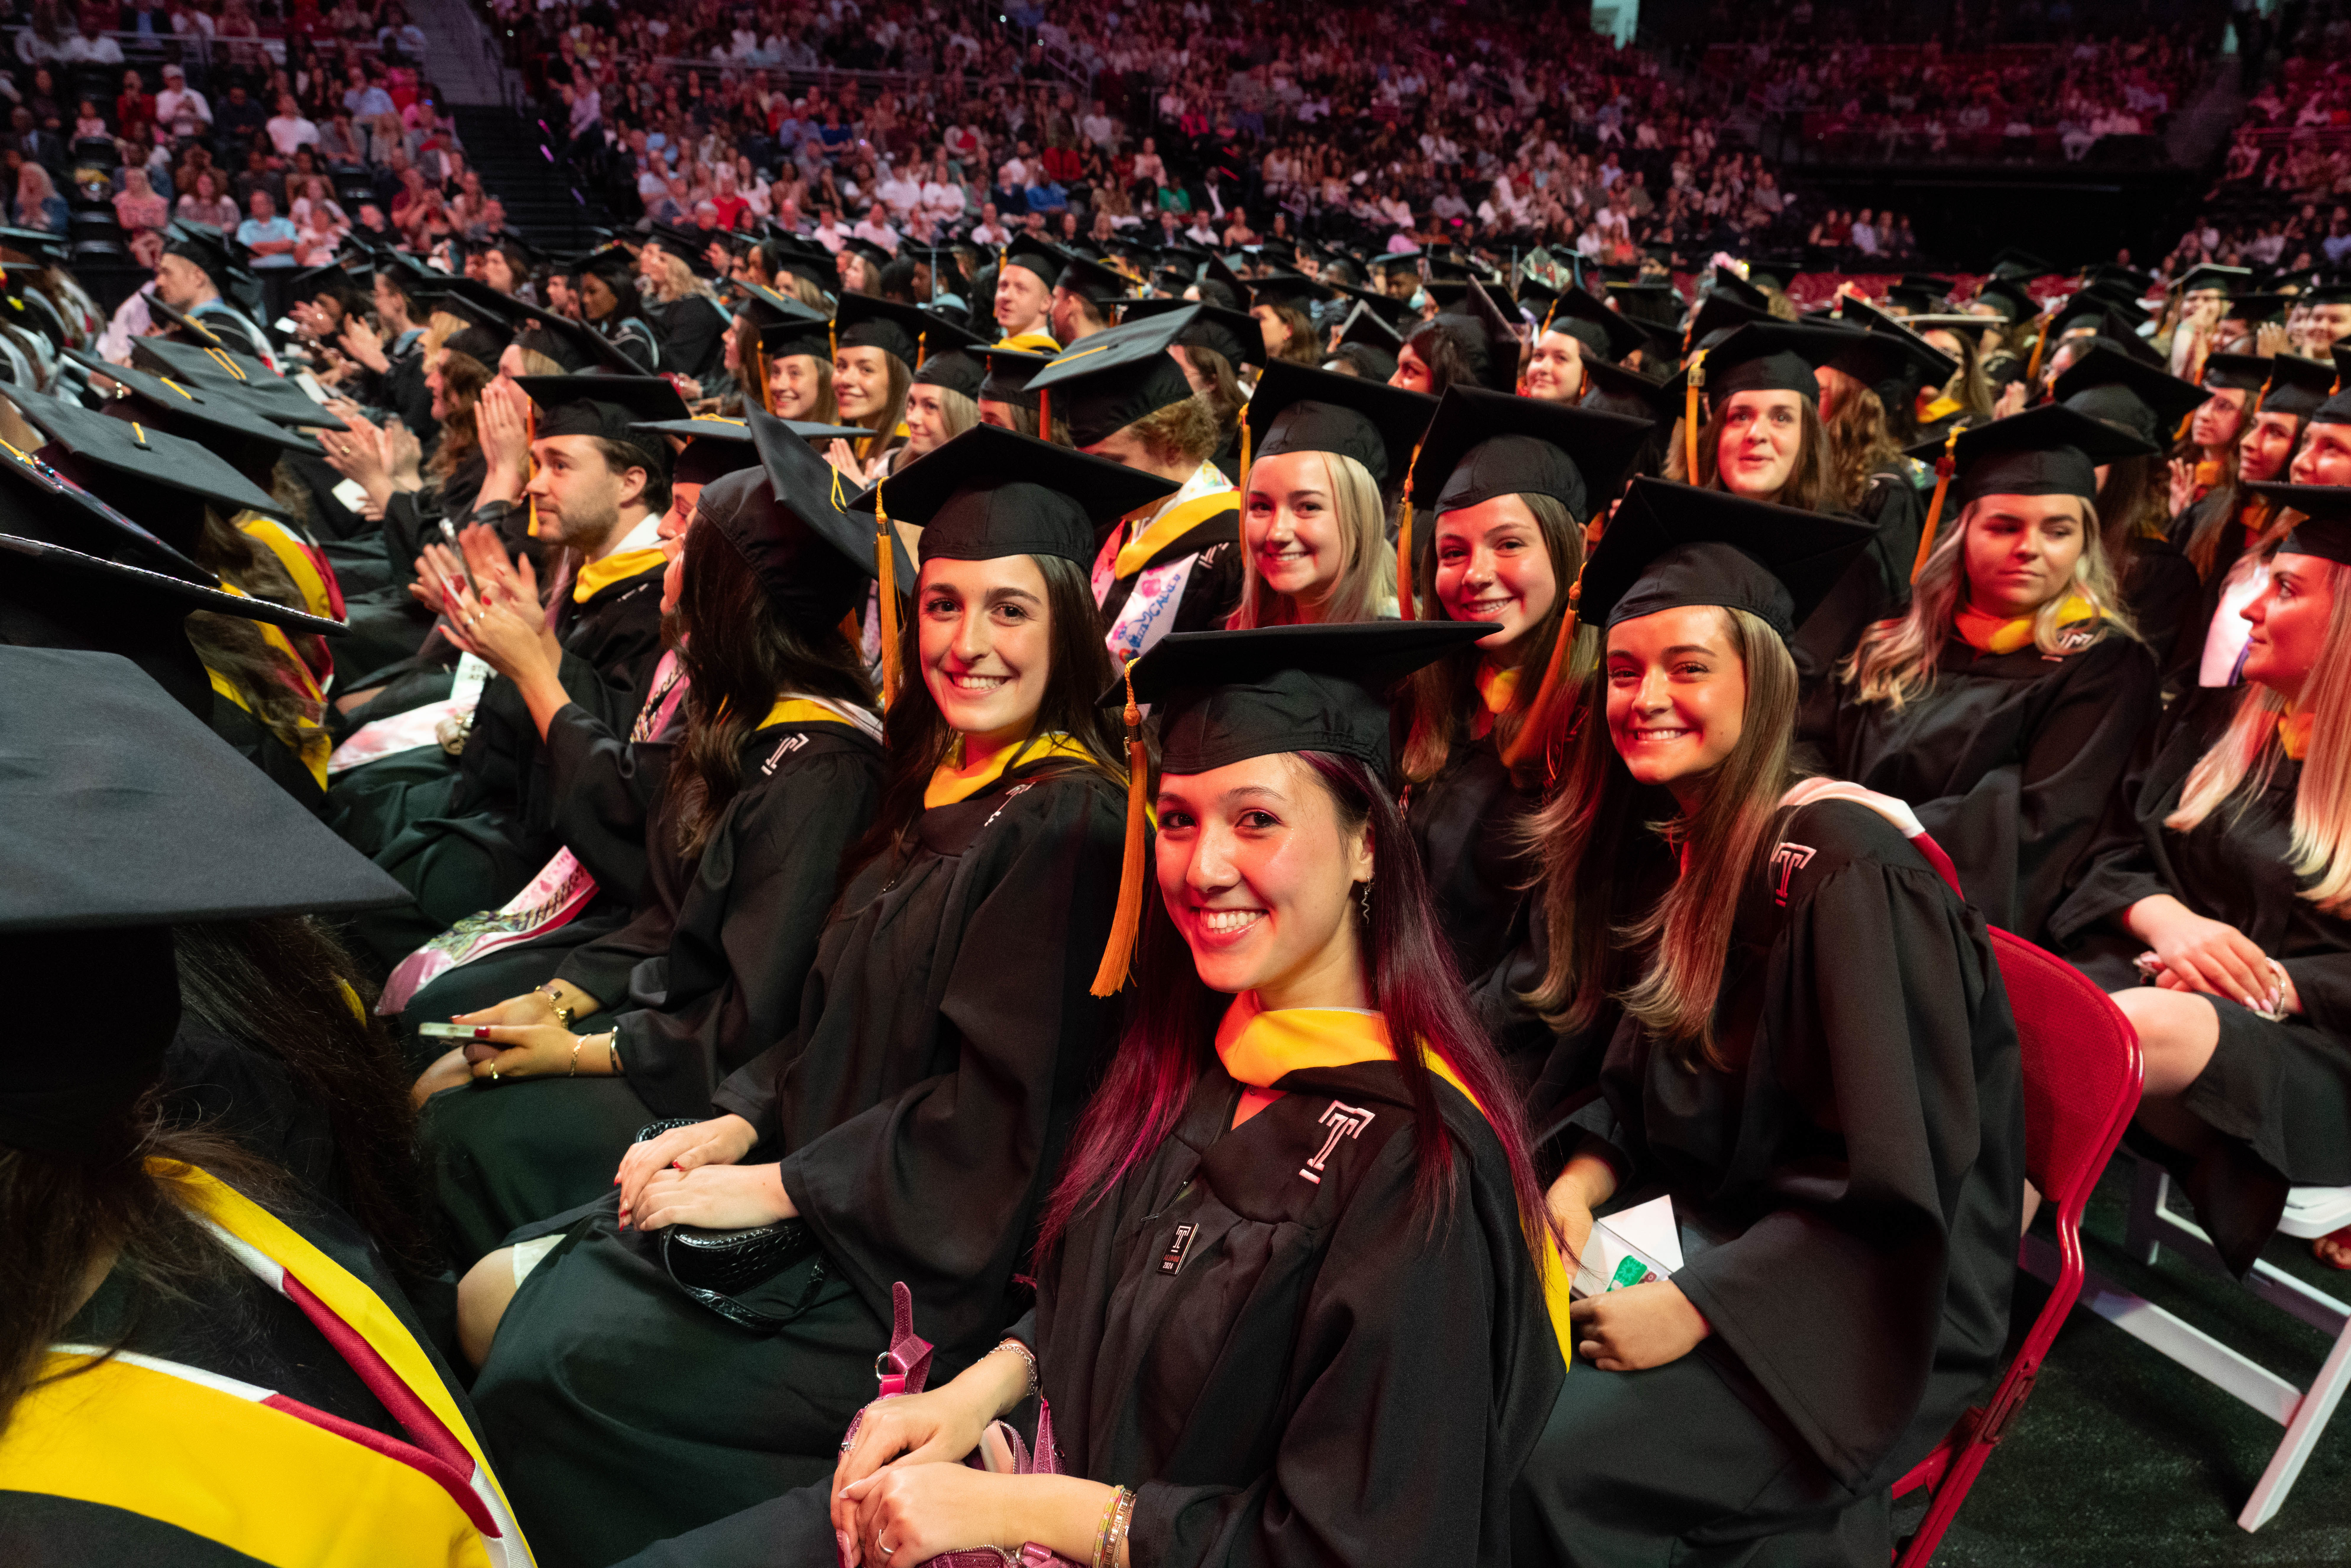 Graduates seated during graduation ceremony, smiling for camera